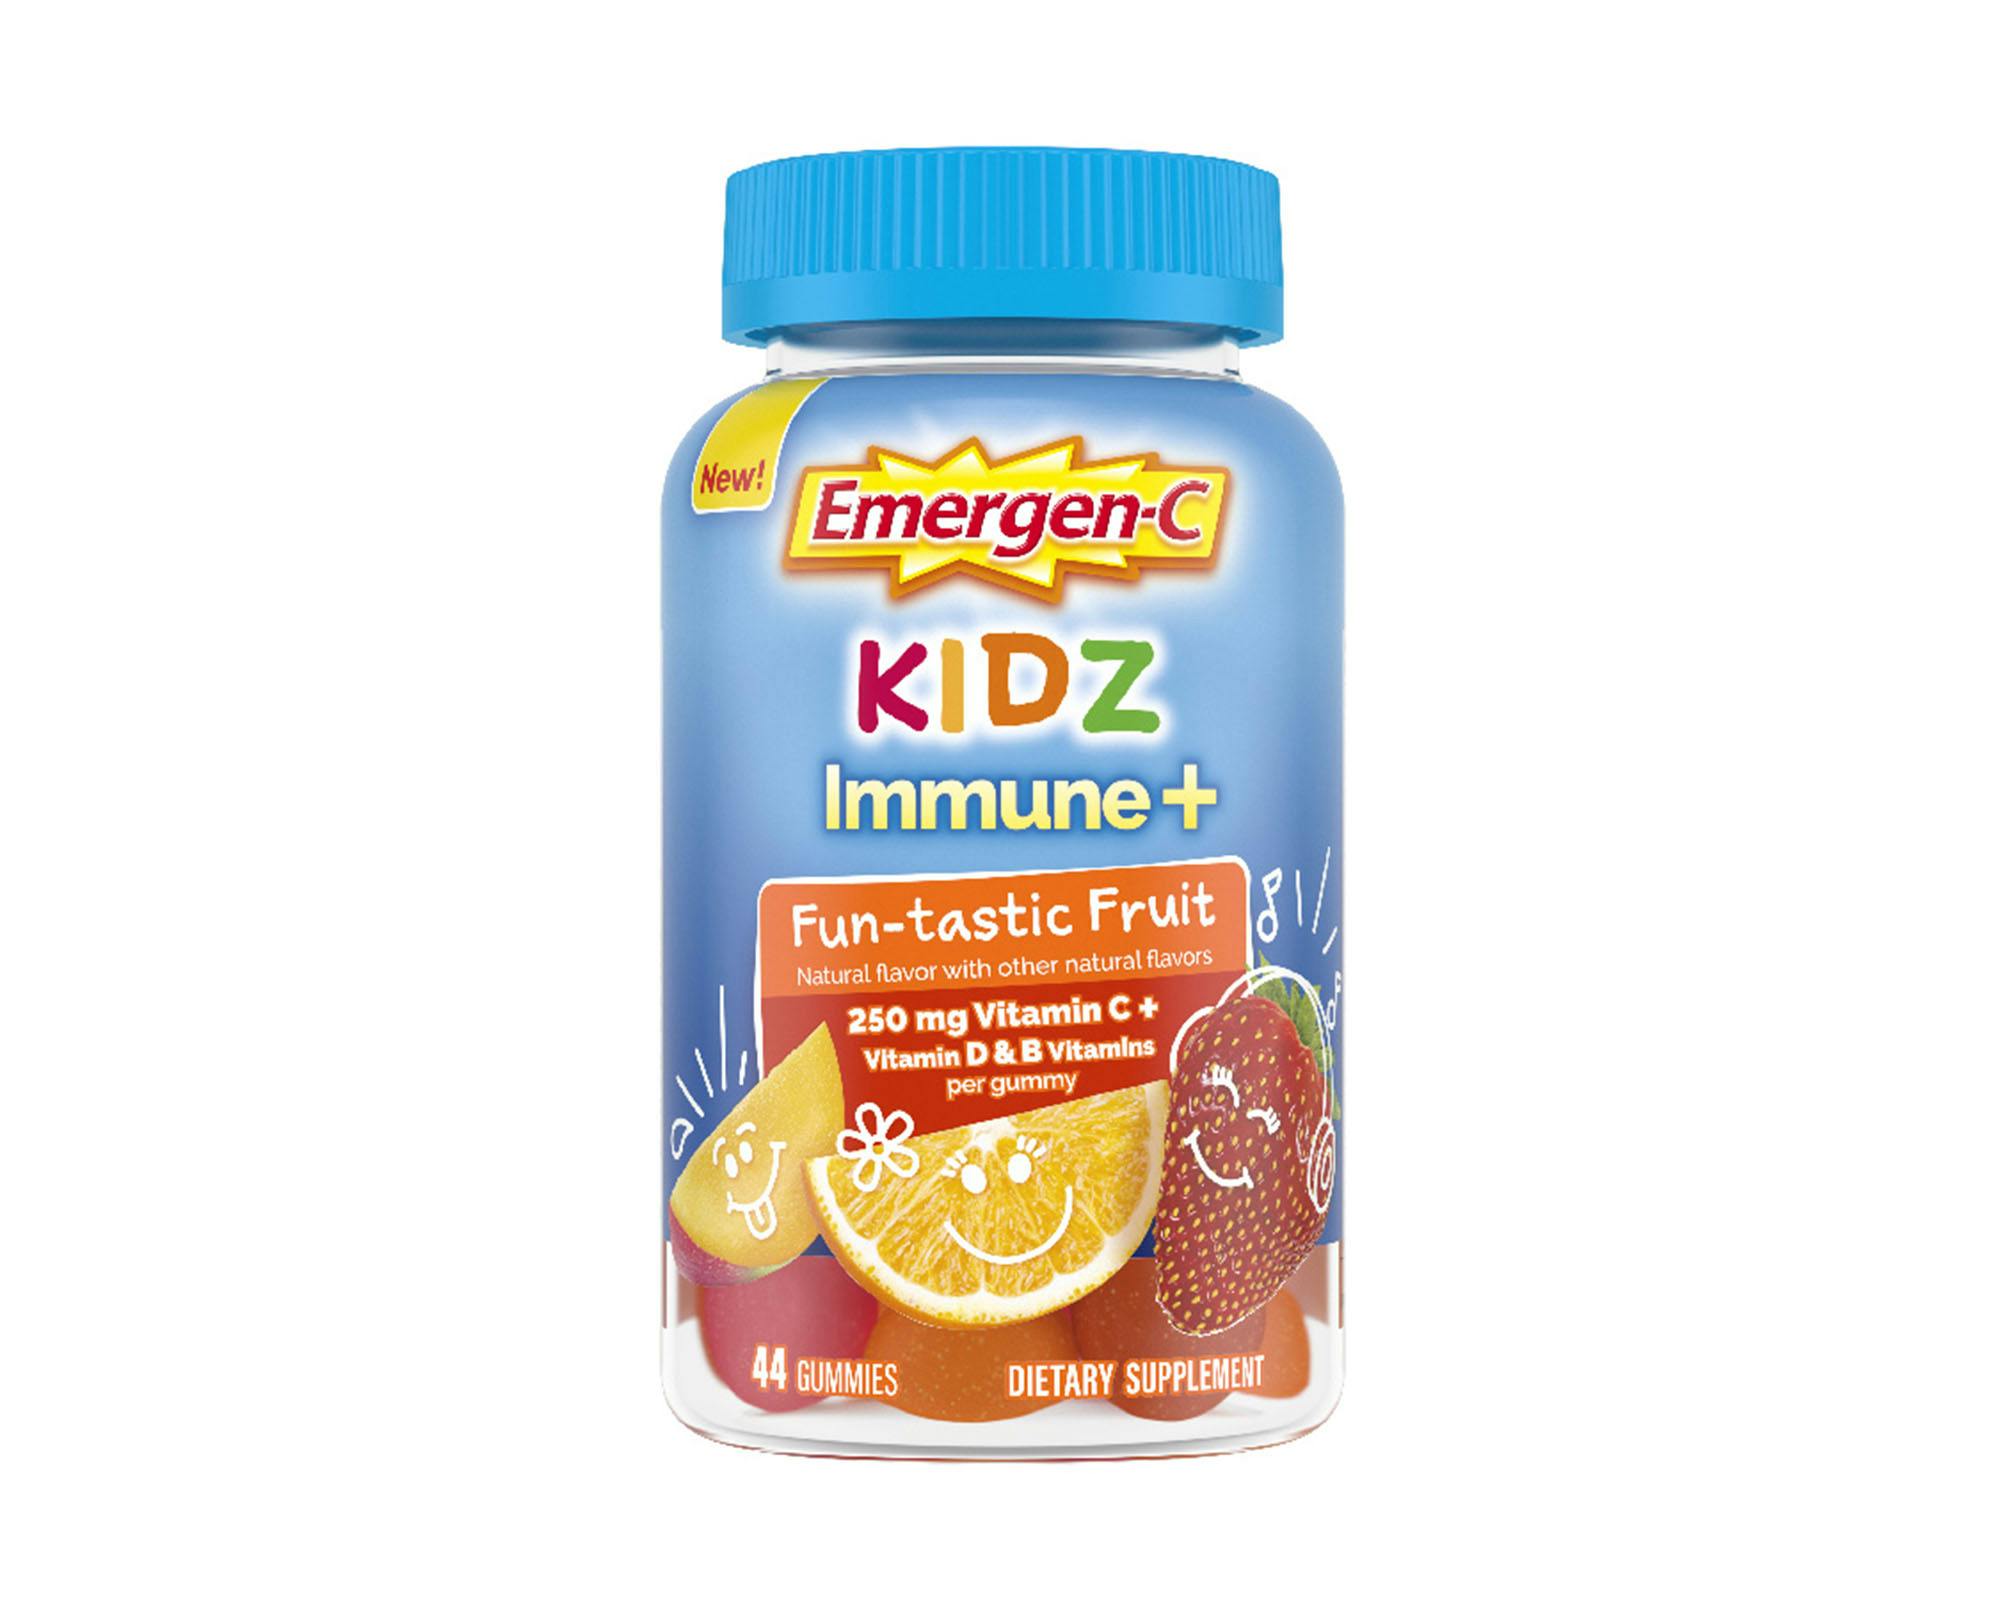 Kidz Fun-tastic Fruit Immune+ Support Gummies bottle